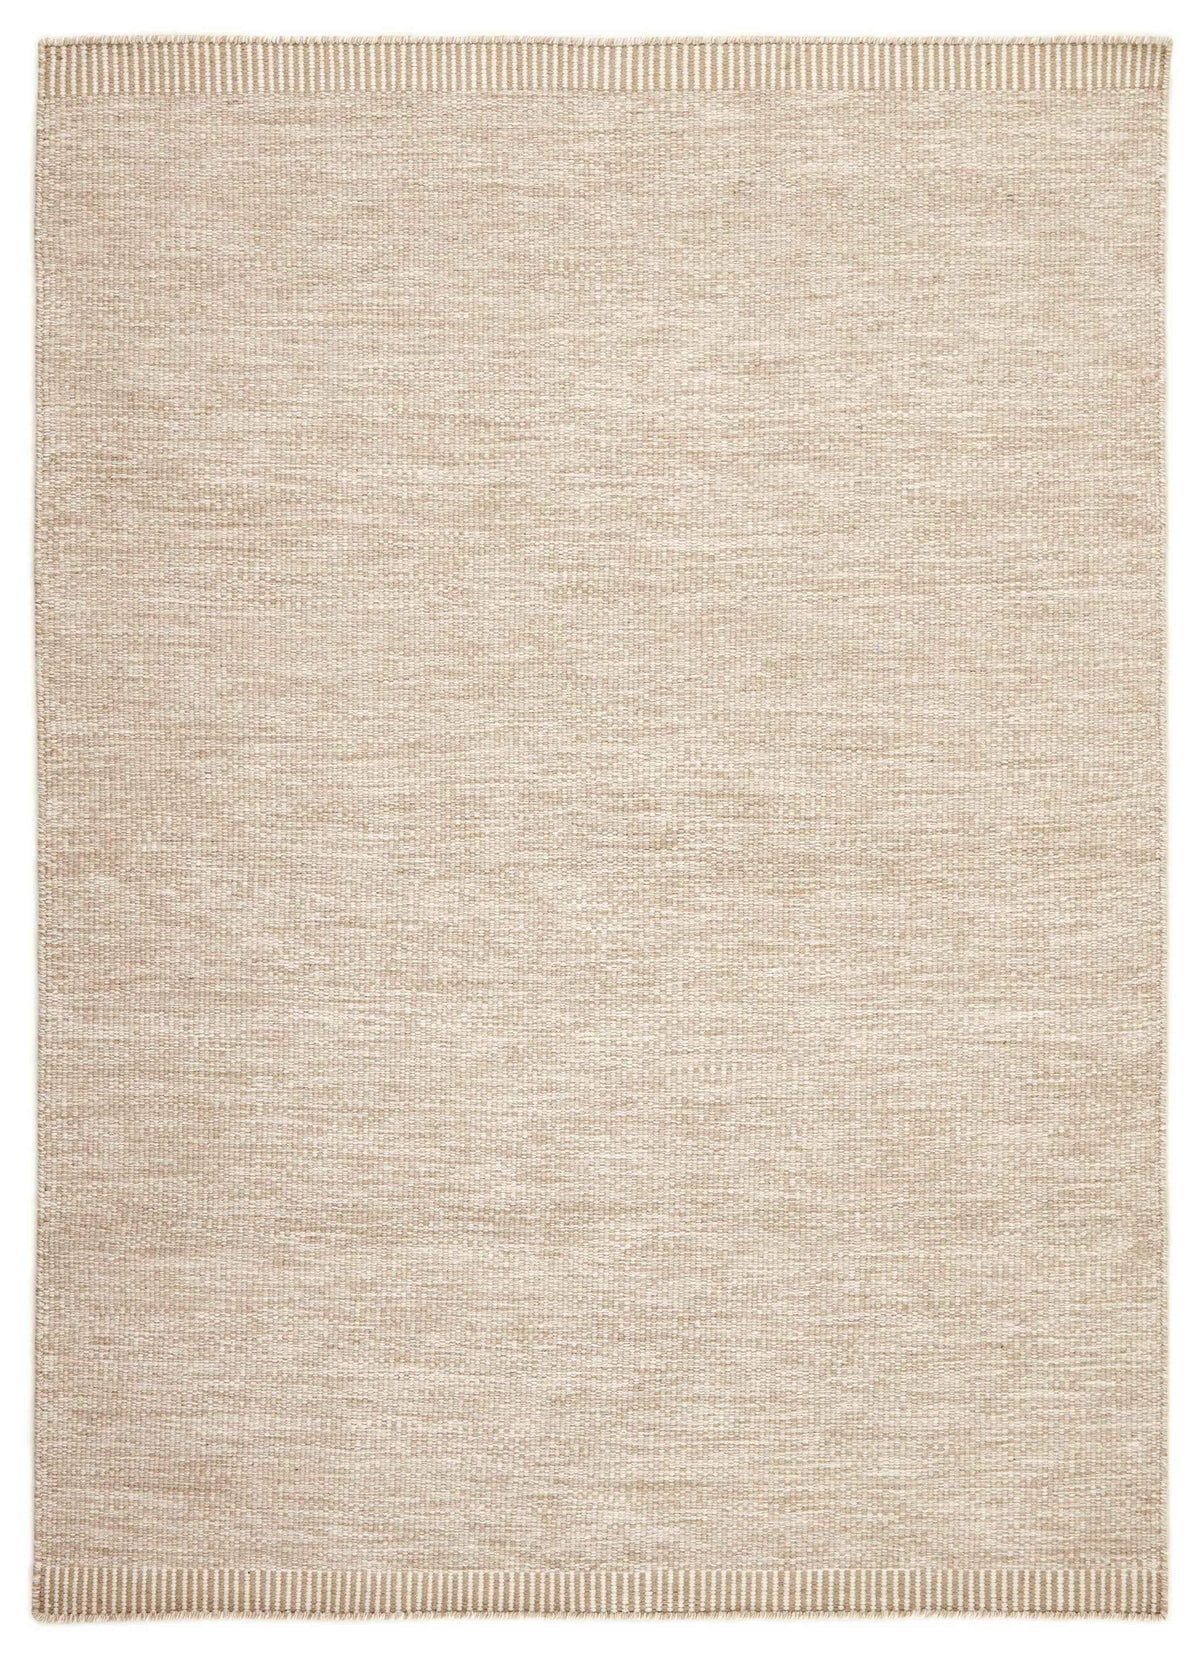 90x60 cm  Indian Wool Beige Rug-J-96-02, Grey